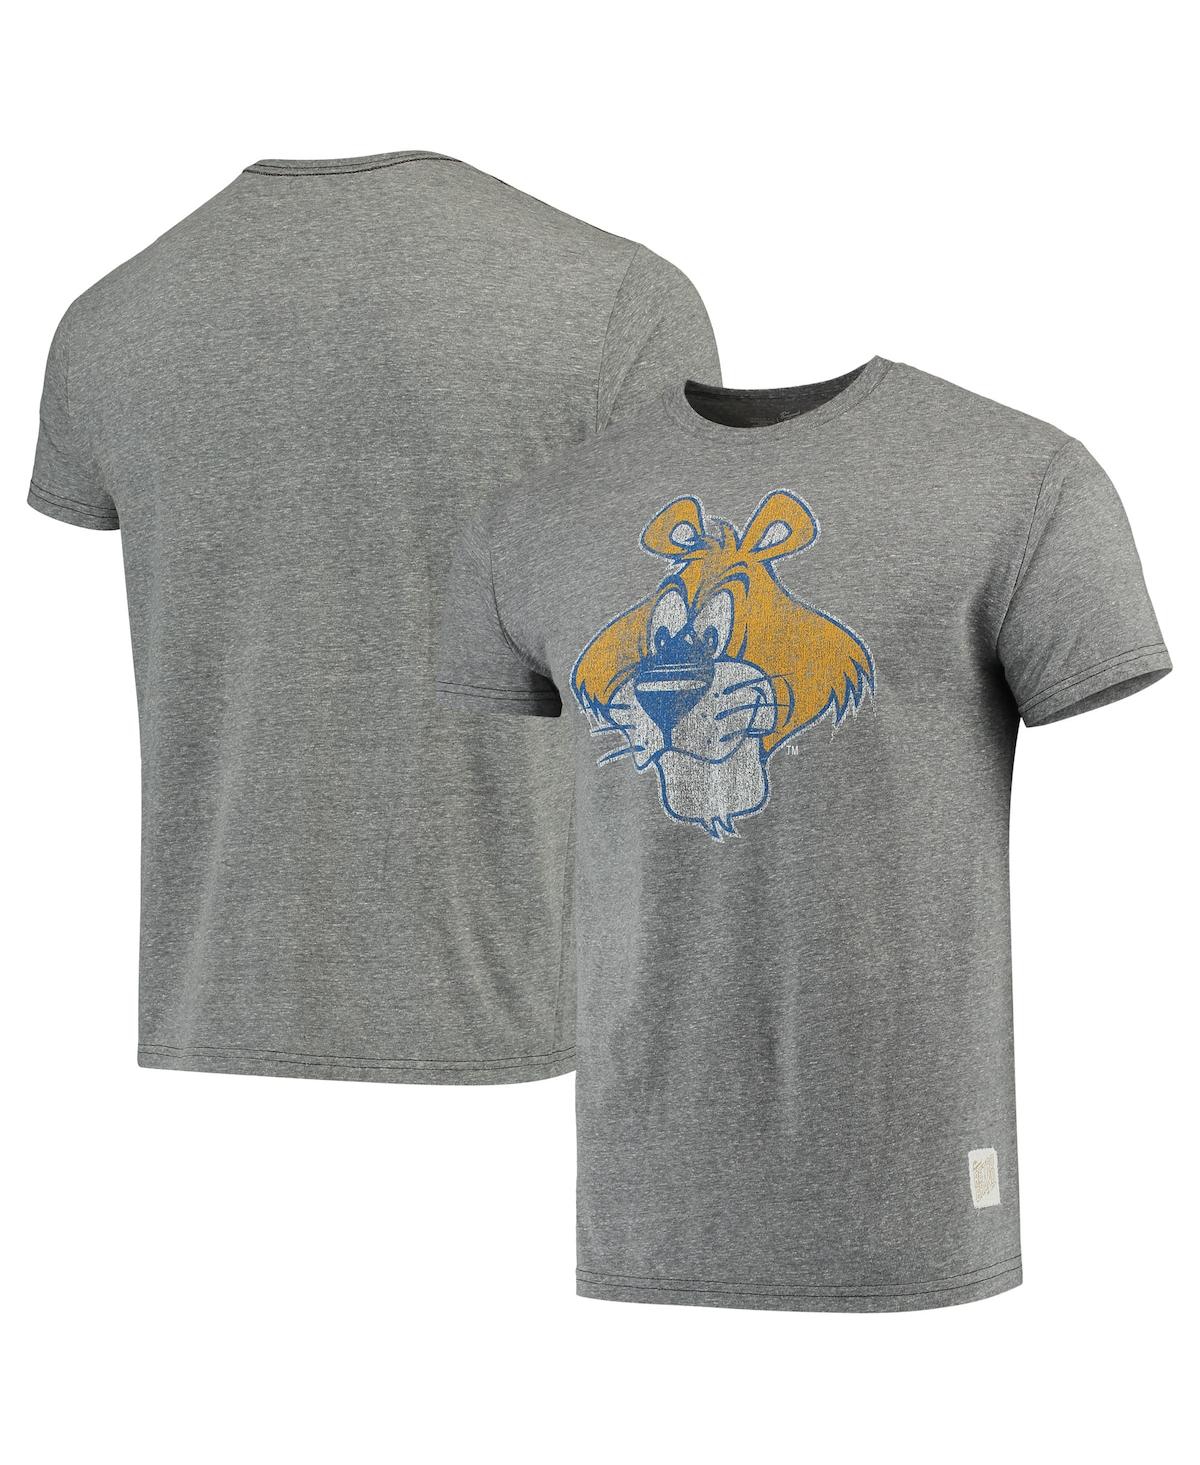 Men's Original Retro Brand Heathered Gray Pitt Panthers Vintage-Like Logo Tri-Blend T-shirt - Heathered Gray